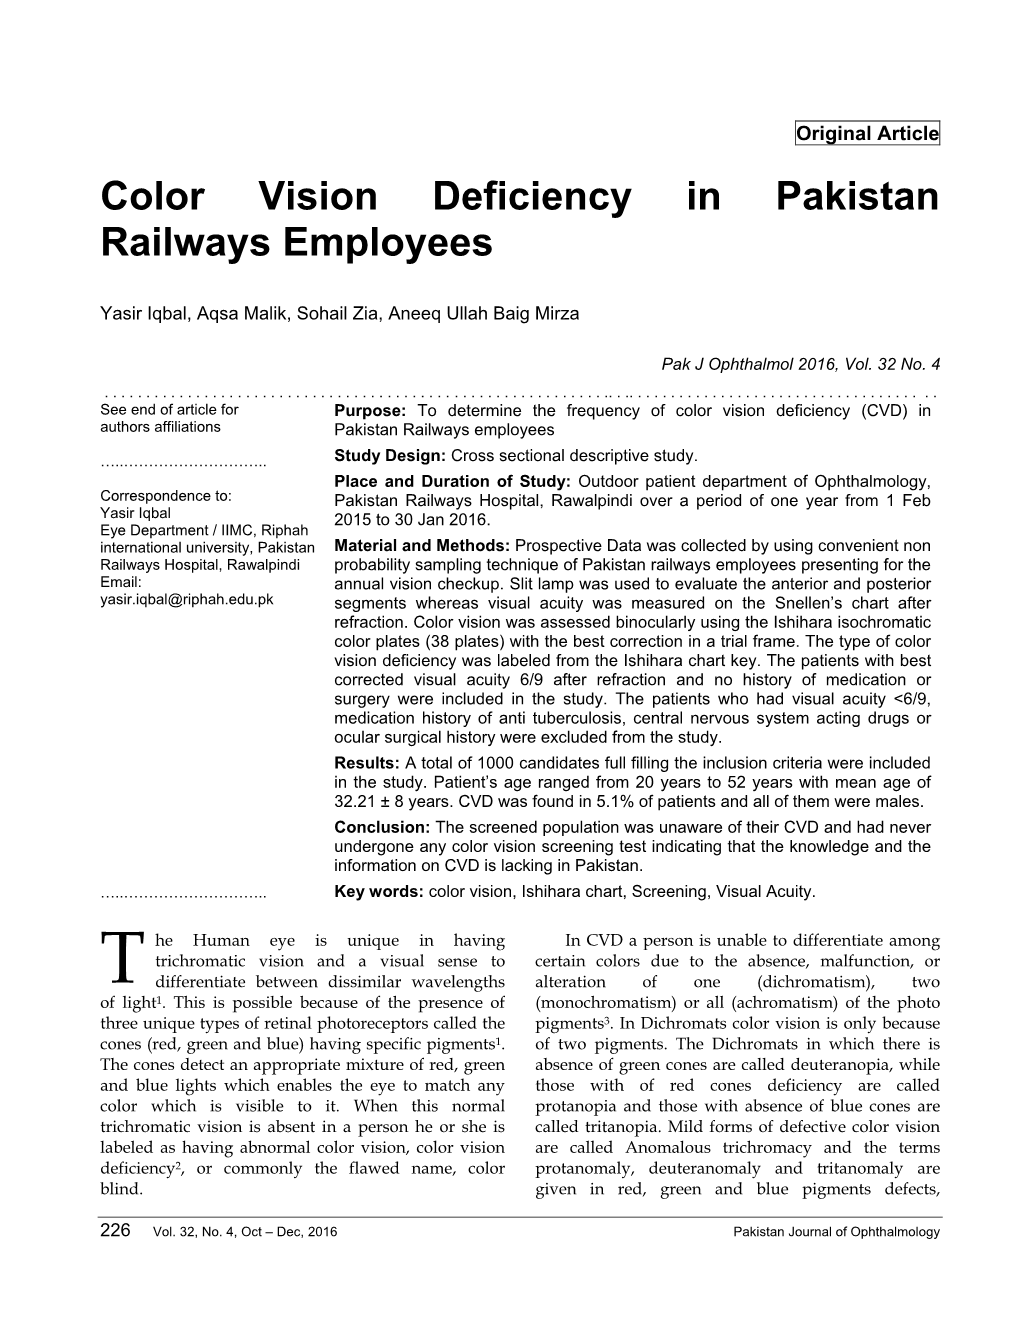 Color Vision Deficiency in Pakistan Railways Employees